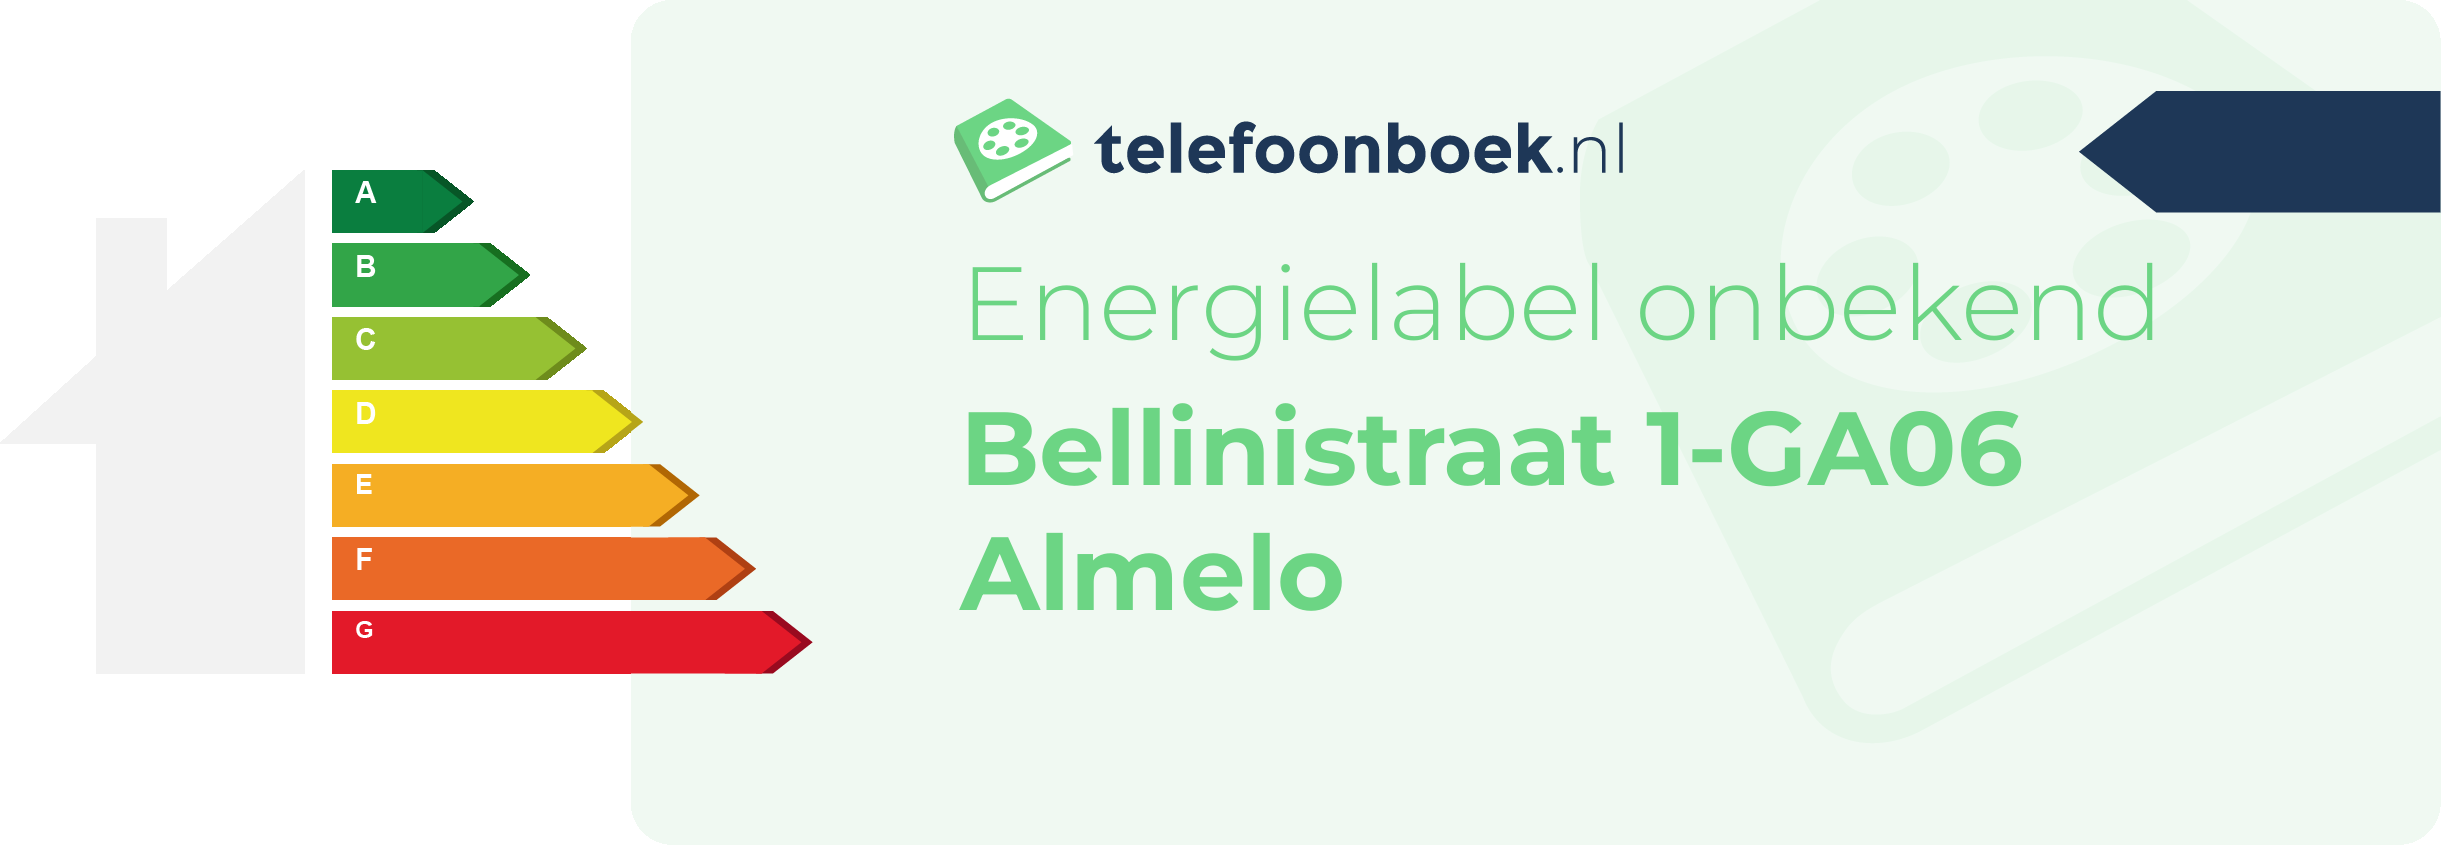 Energielabel Bellinistraat 1-GA06 Almelo